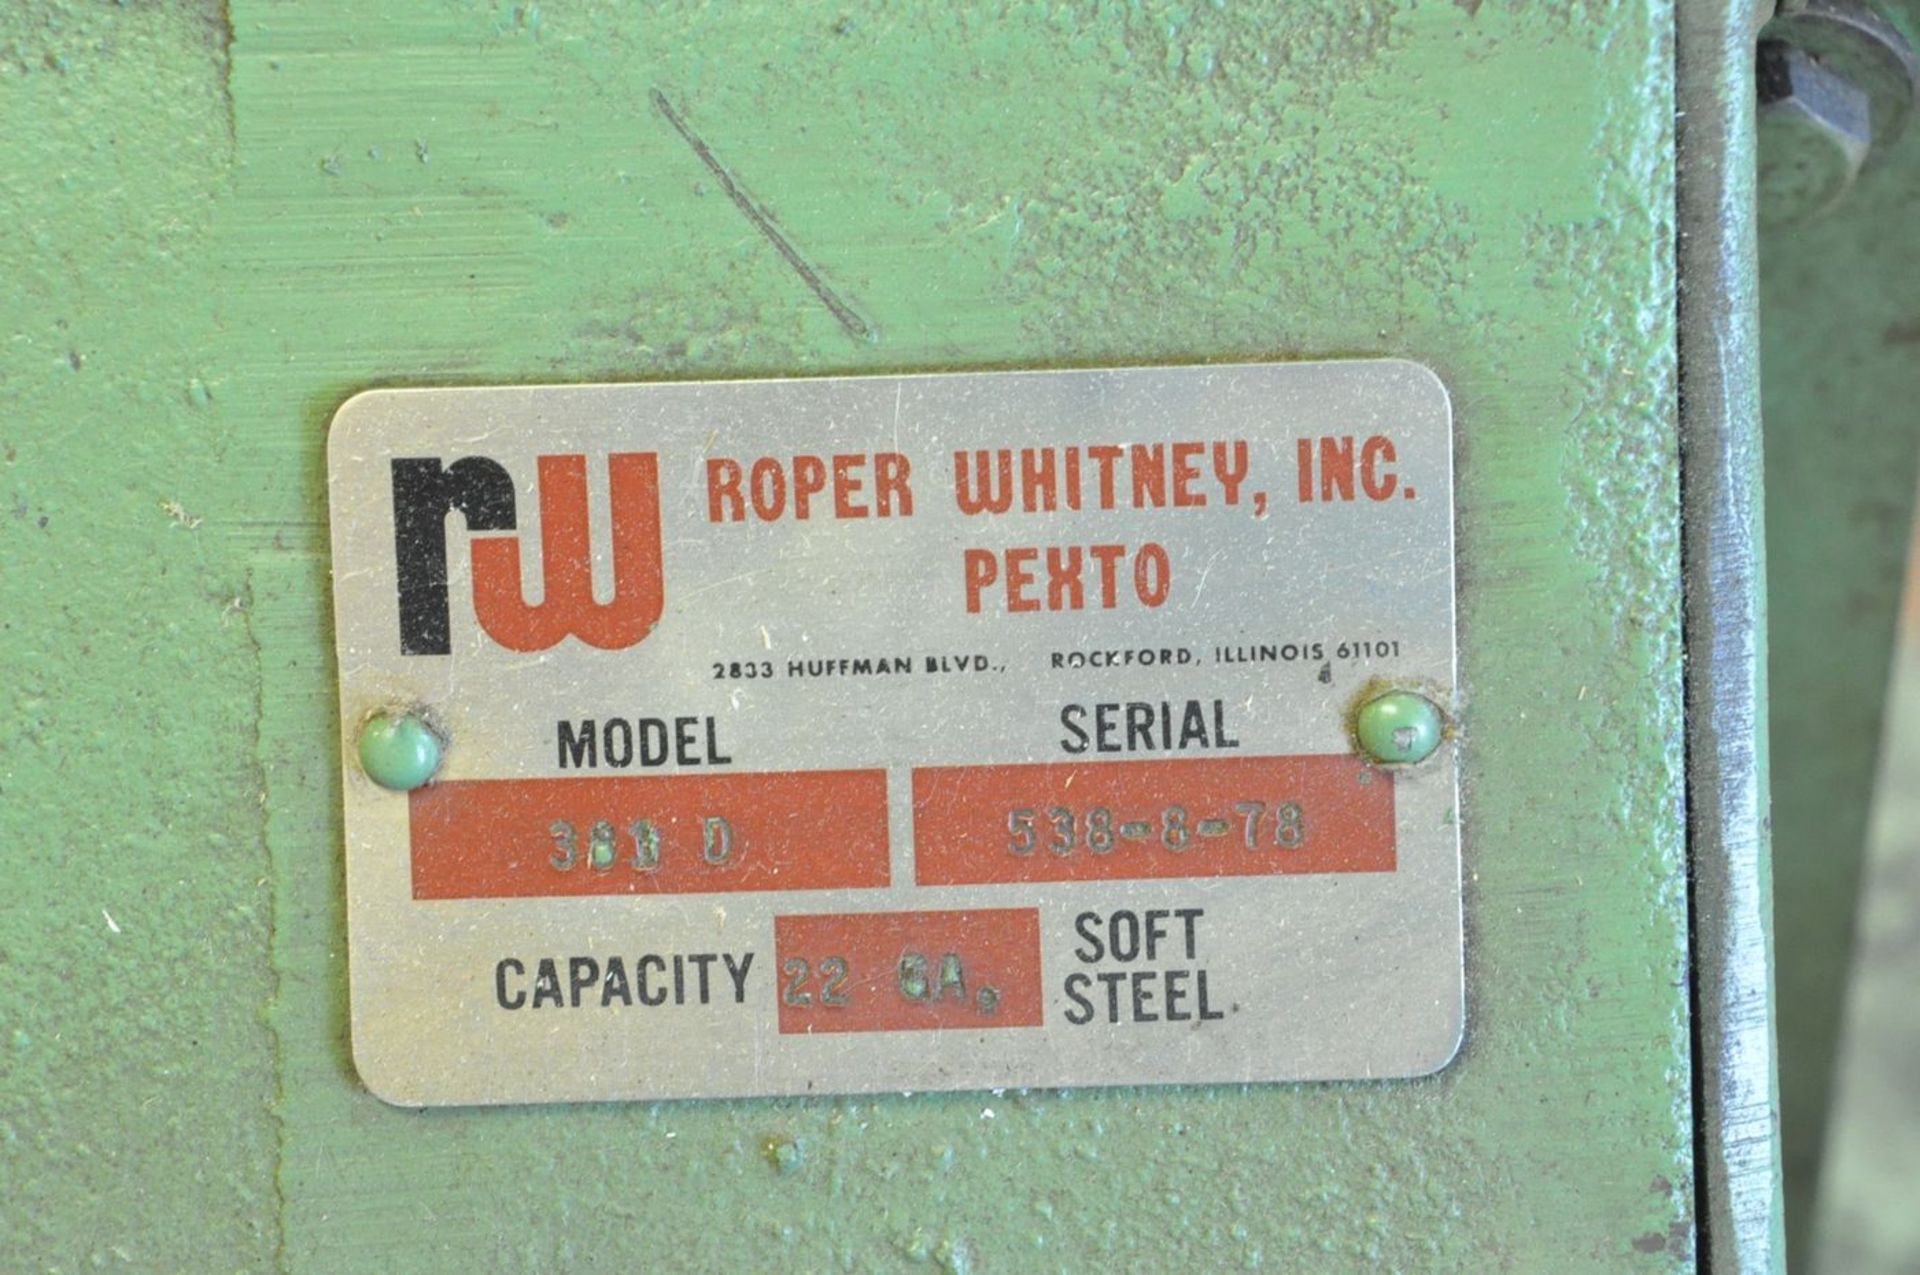 Roper Whitney Model 381D 22 Gauge X 36" Manual Pinch Roll Bender, S/N 538-8-78 - Image 3 of 3